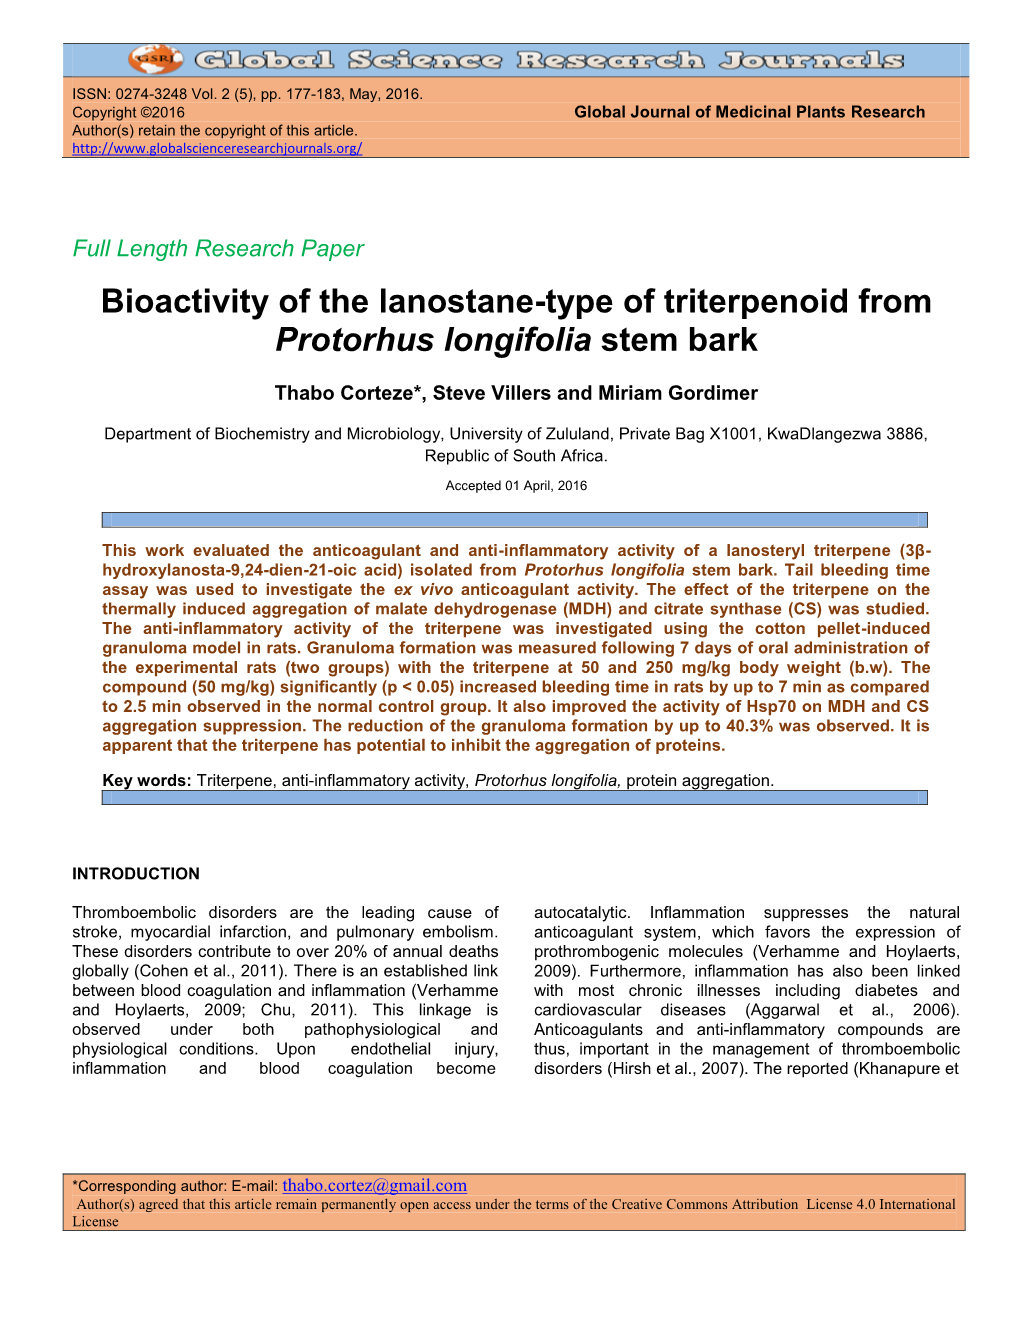 Bioactivity of the Lanostane-Type of Triterpenoid from Protorhus Longifolia Stem Bark